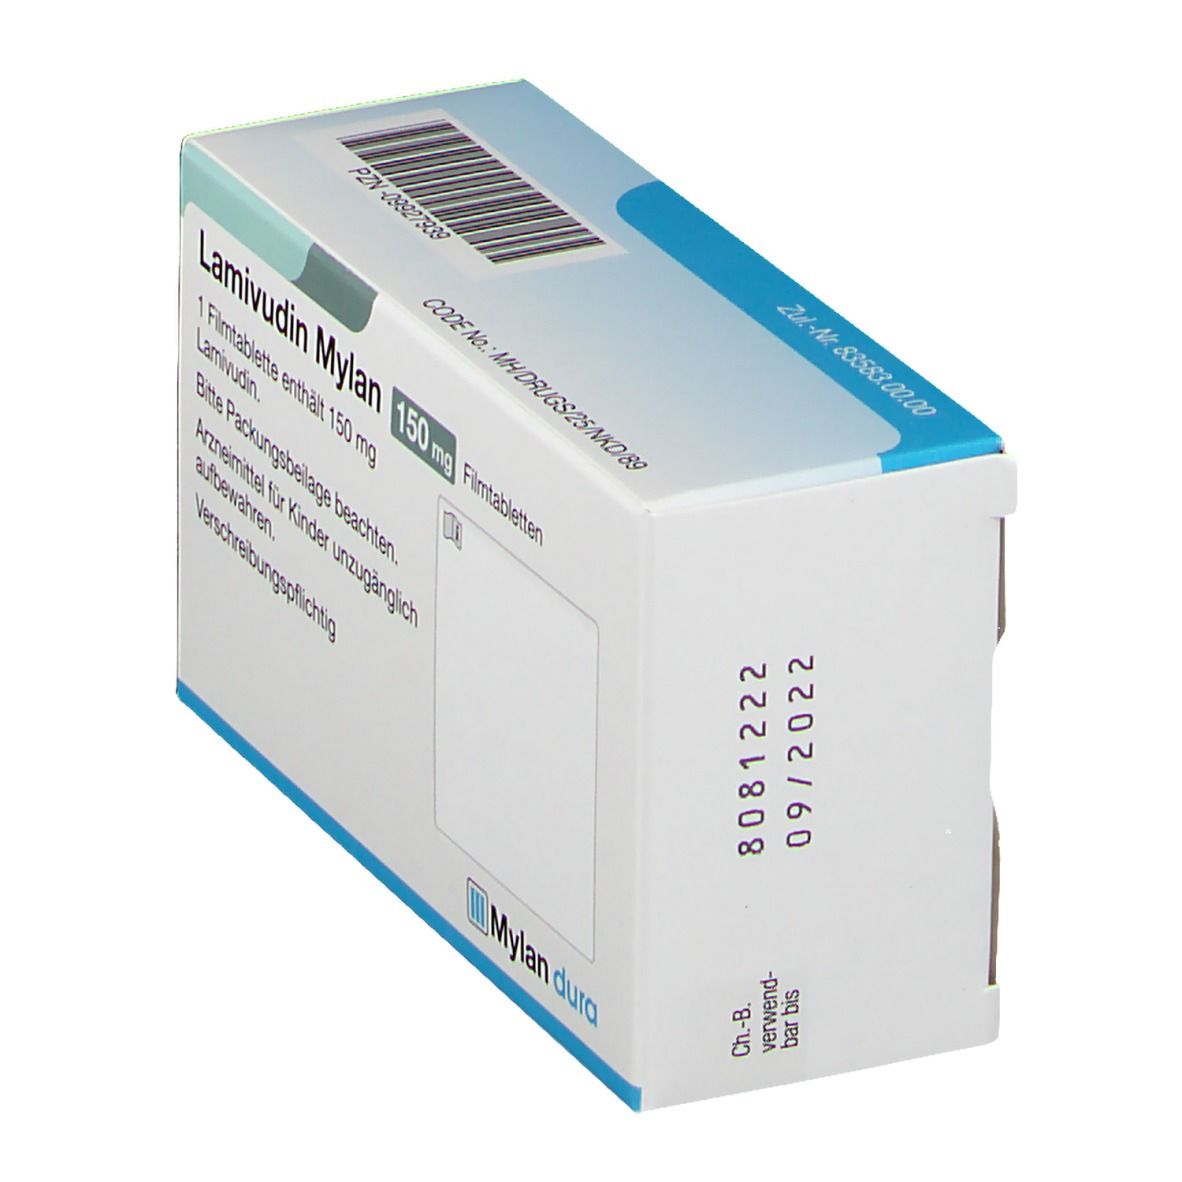 Lamivudin Mylan 150 mg